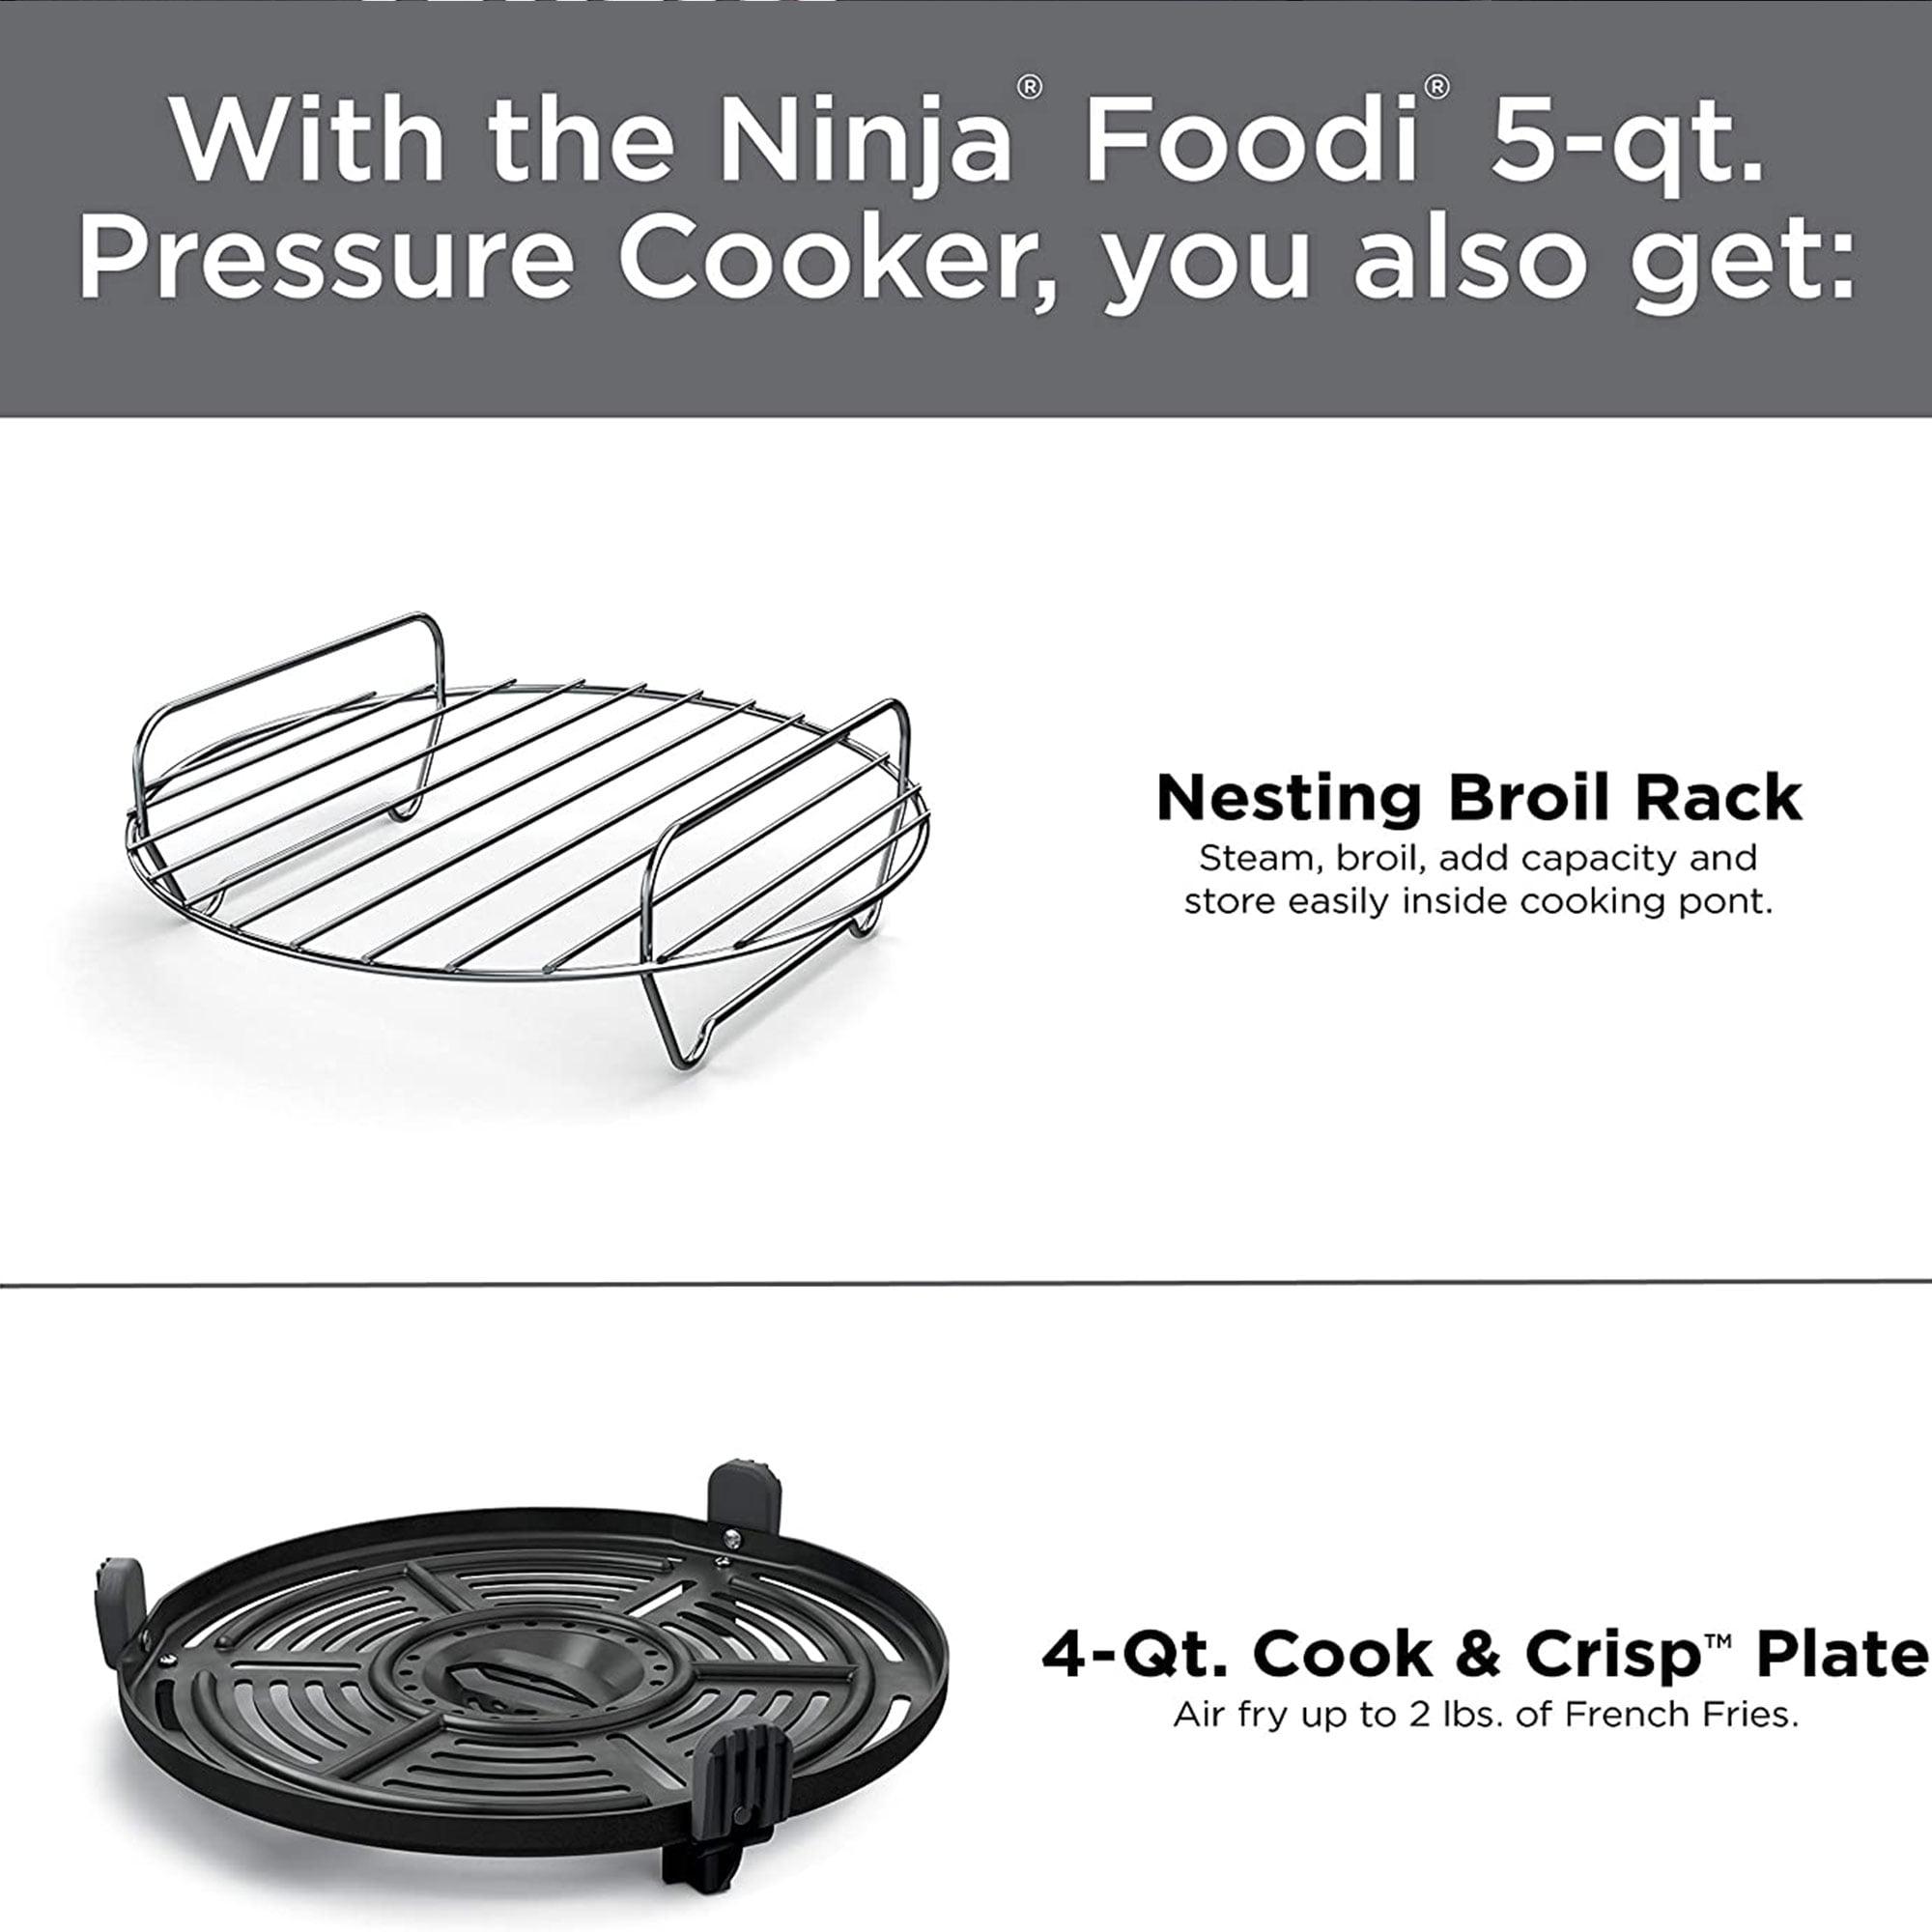 Best air fryer deal: The Ninja 9-in-1 Pressure Cooker is $46 off